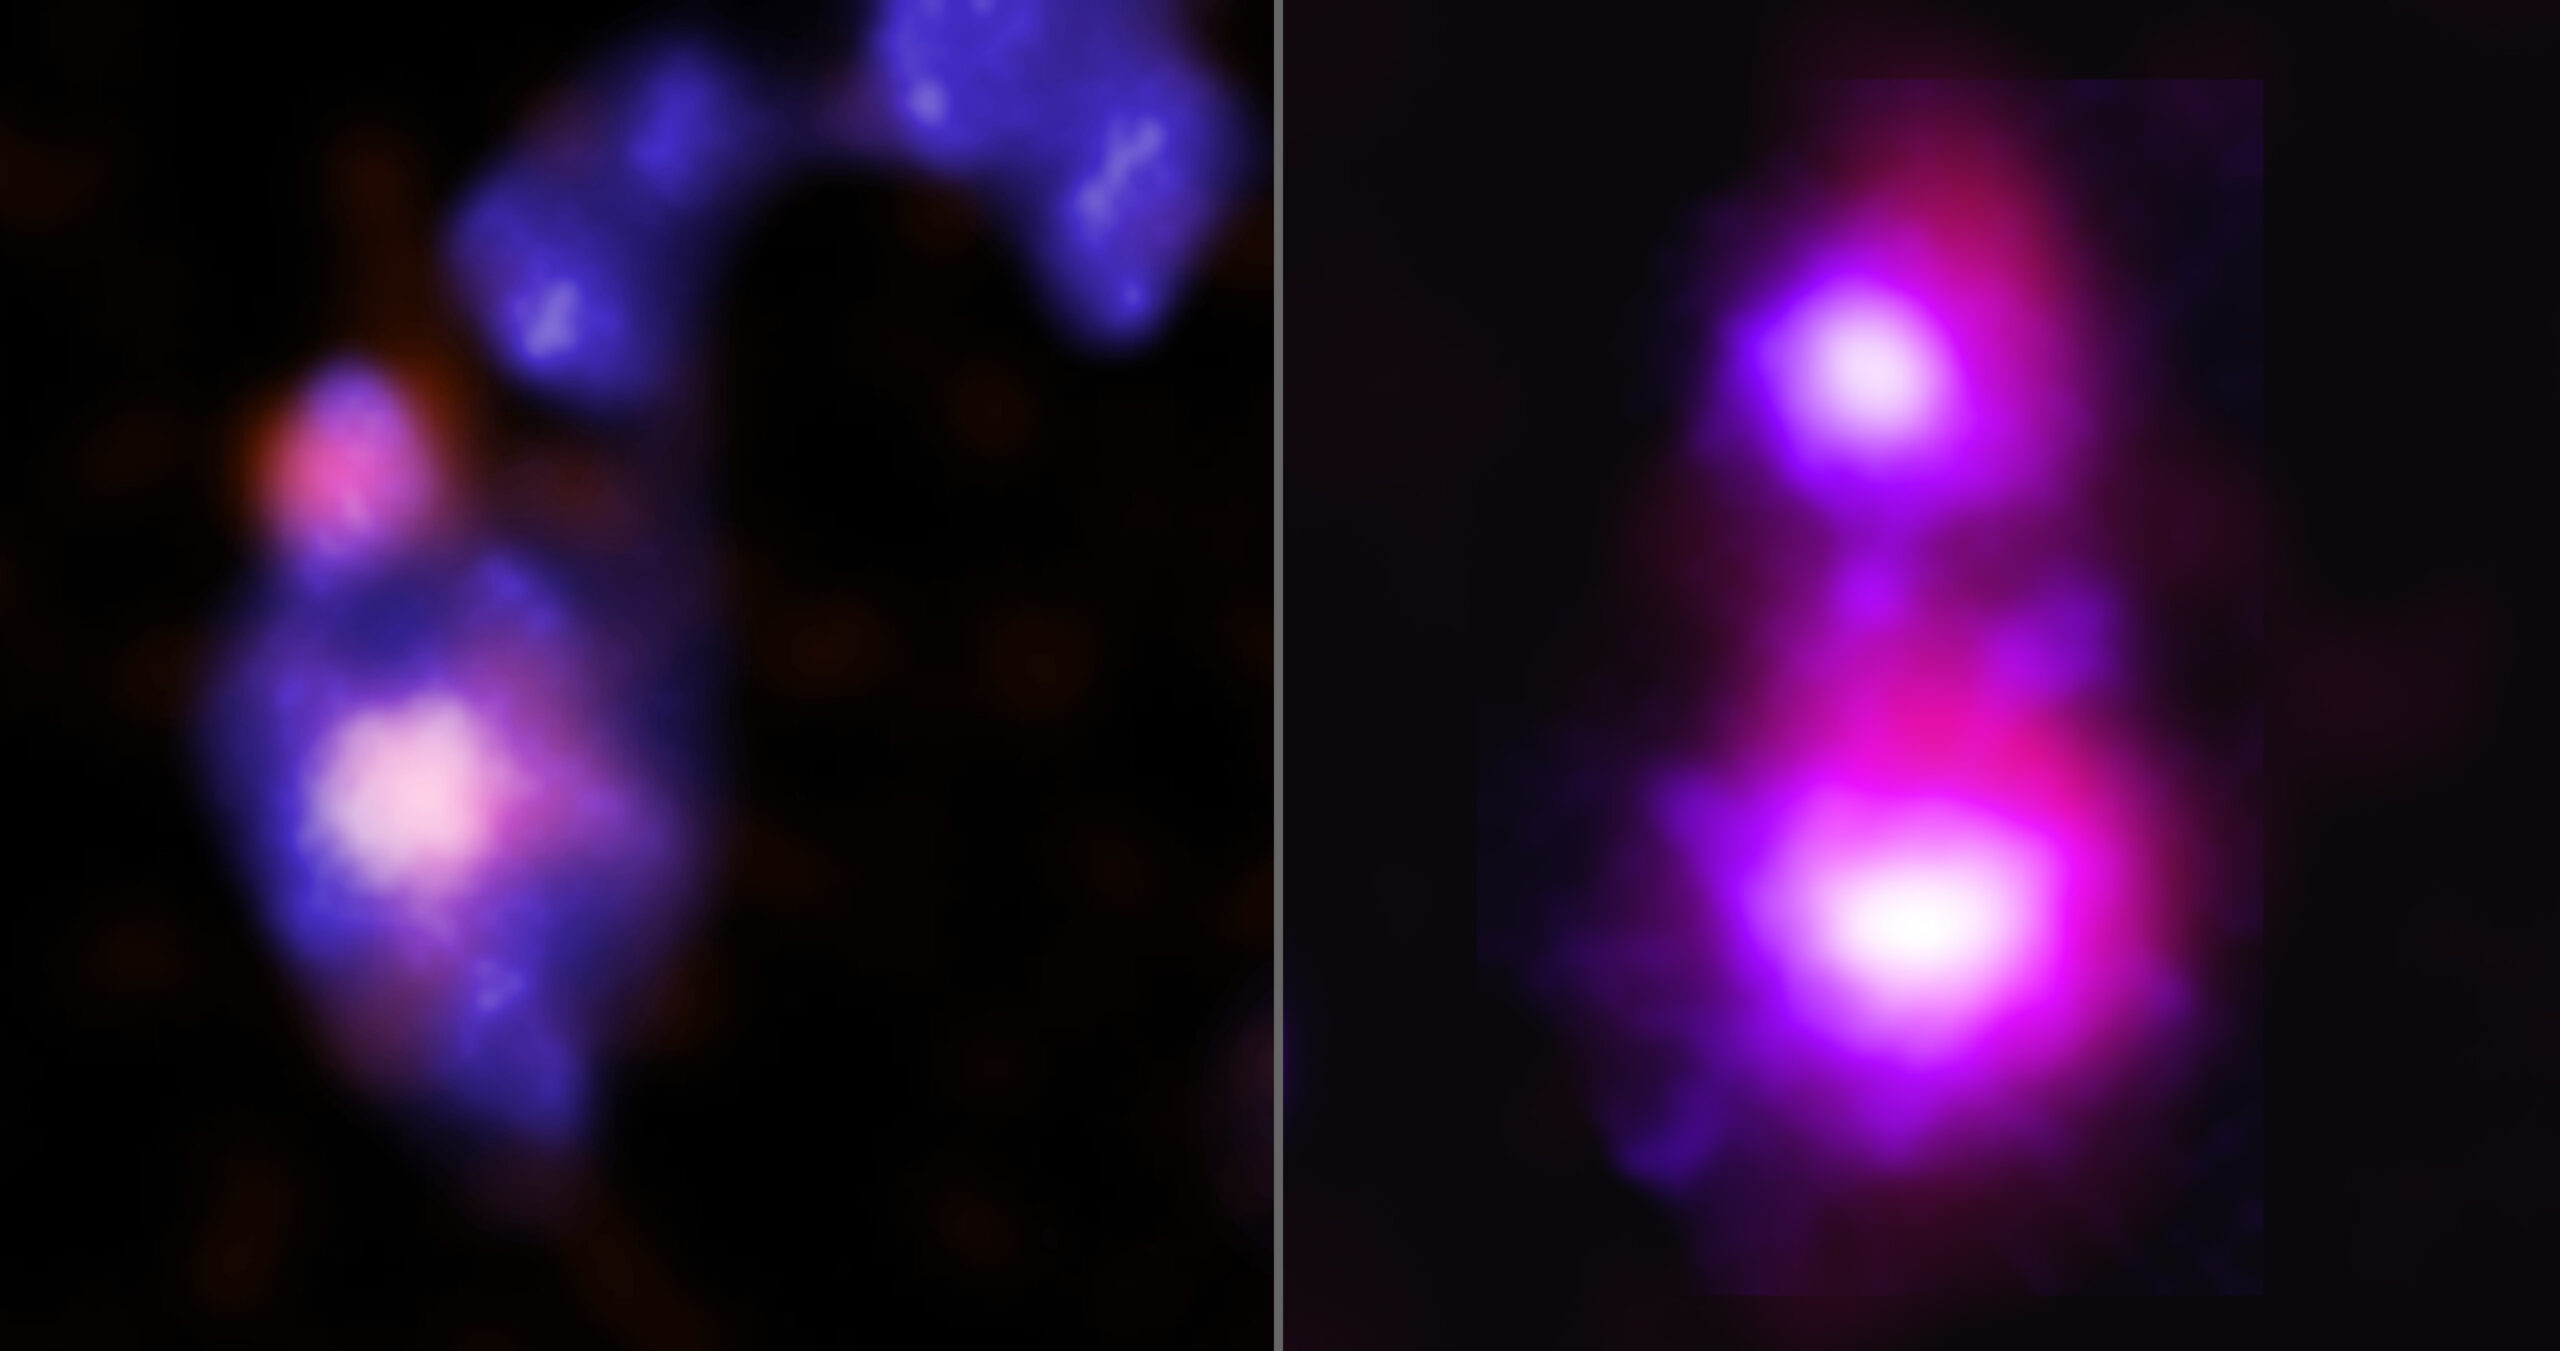 Observan por primera vez galaxias enanas que se fusionan con agujeros negros gigantes